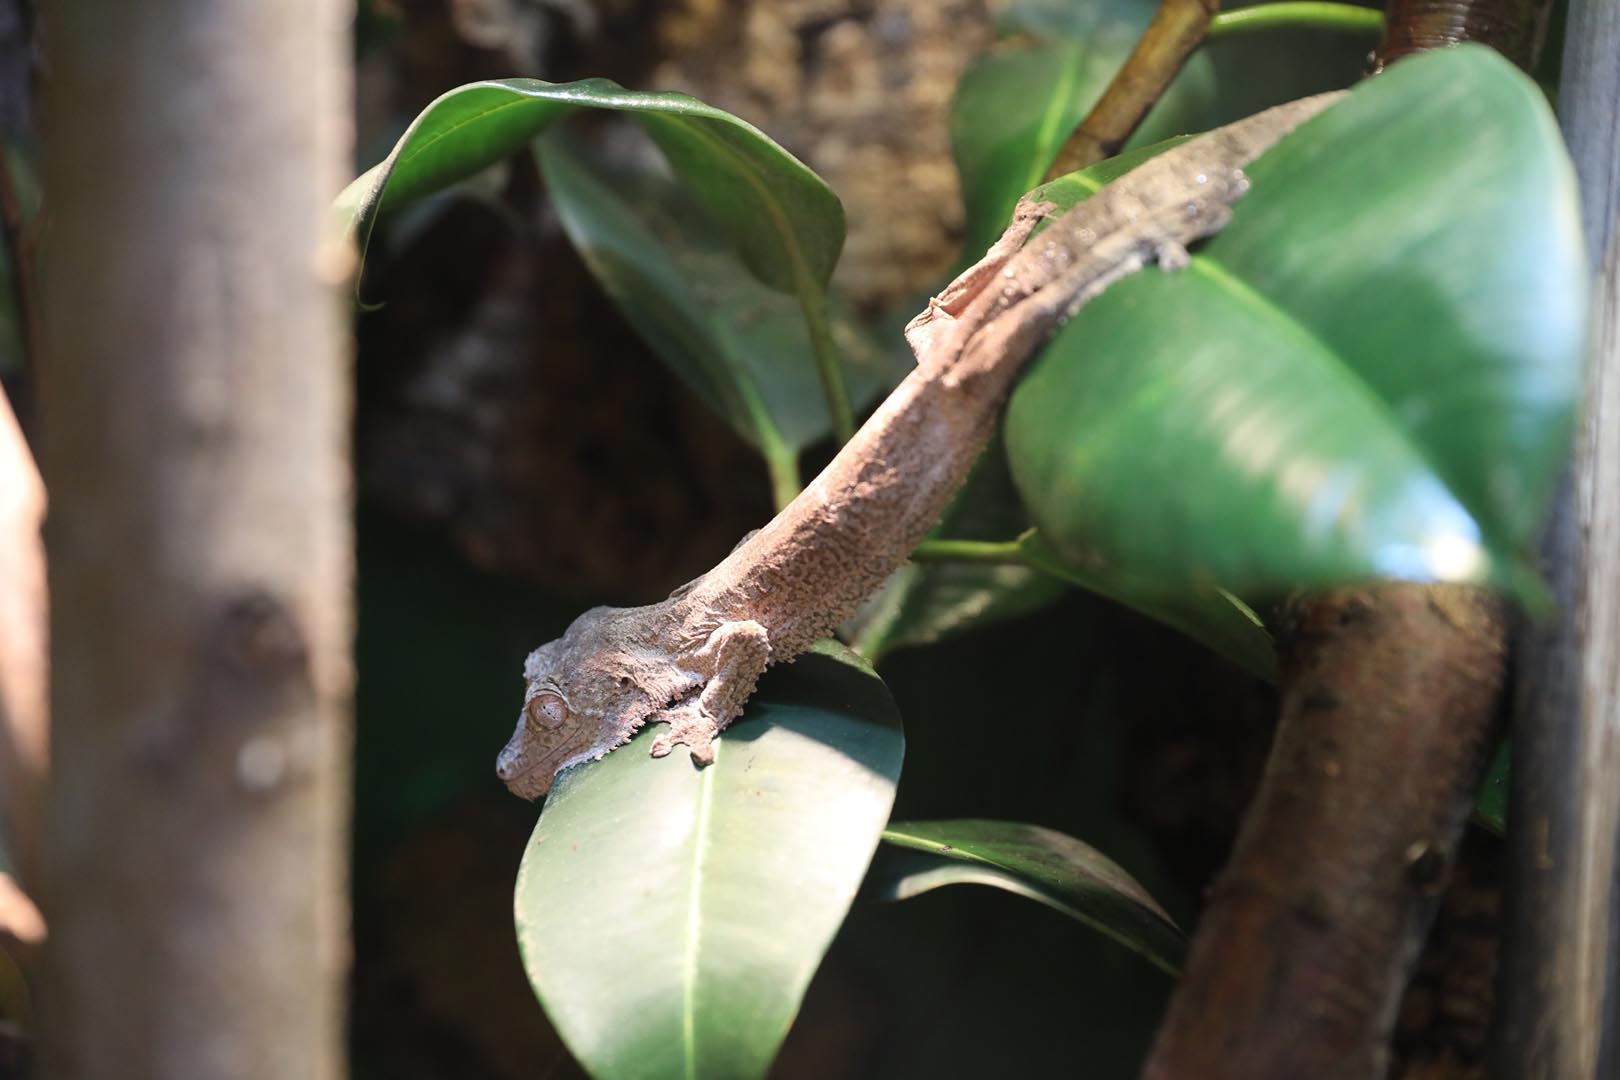 Henkels leaf tailed gecko standing across leaves in wee beasties Image: AMY MIDDLETON 2022